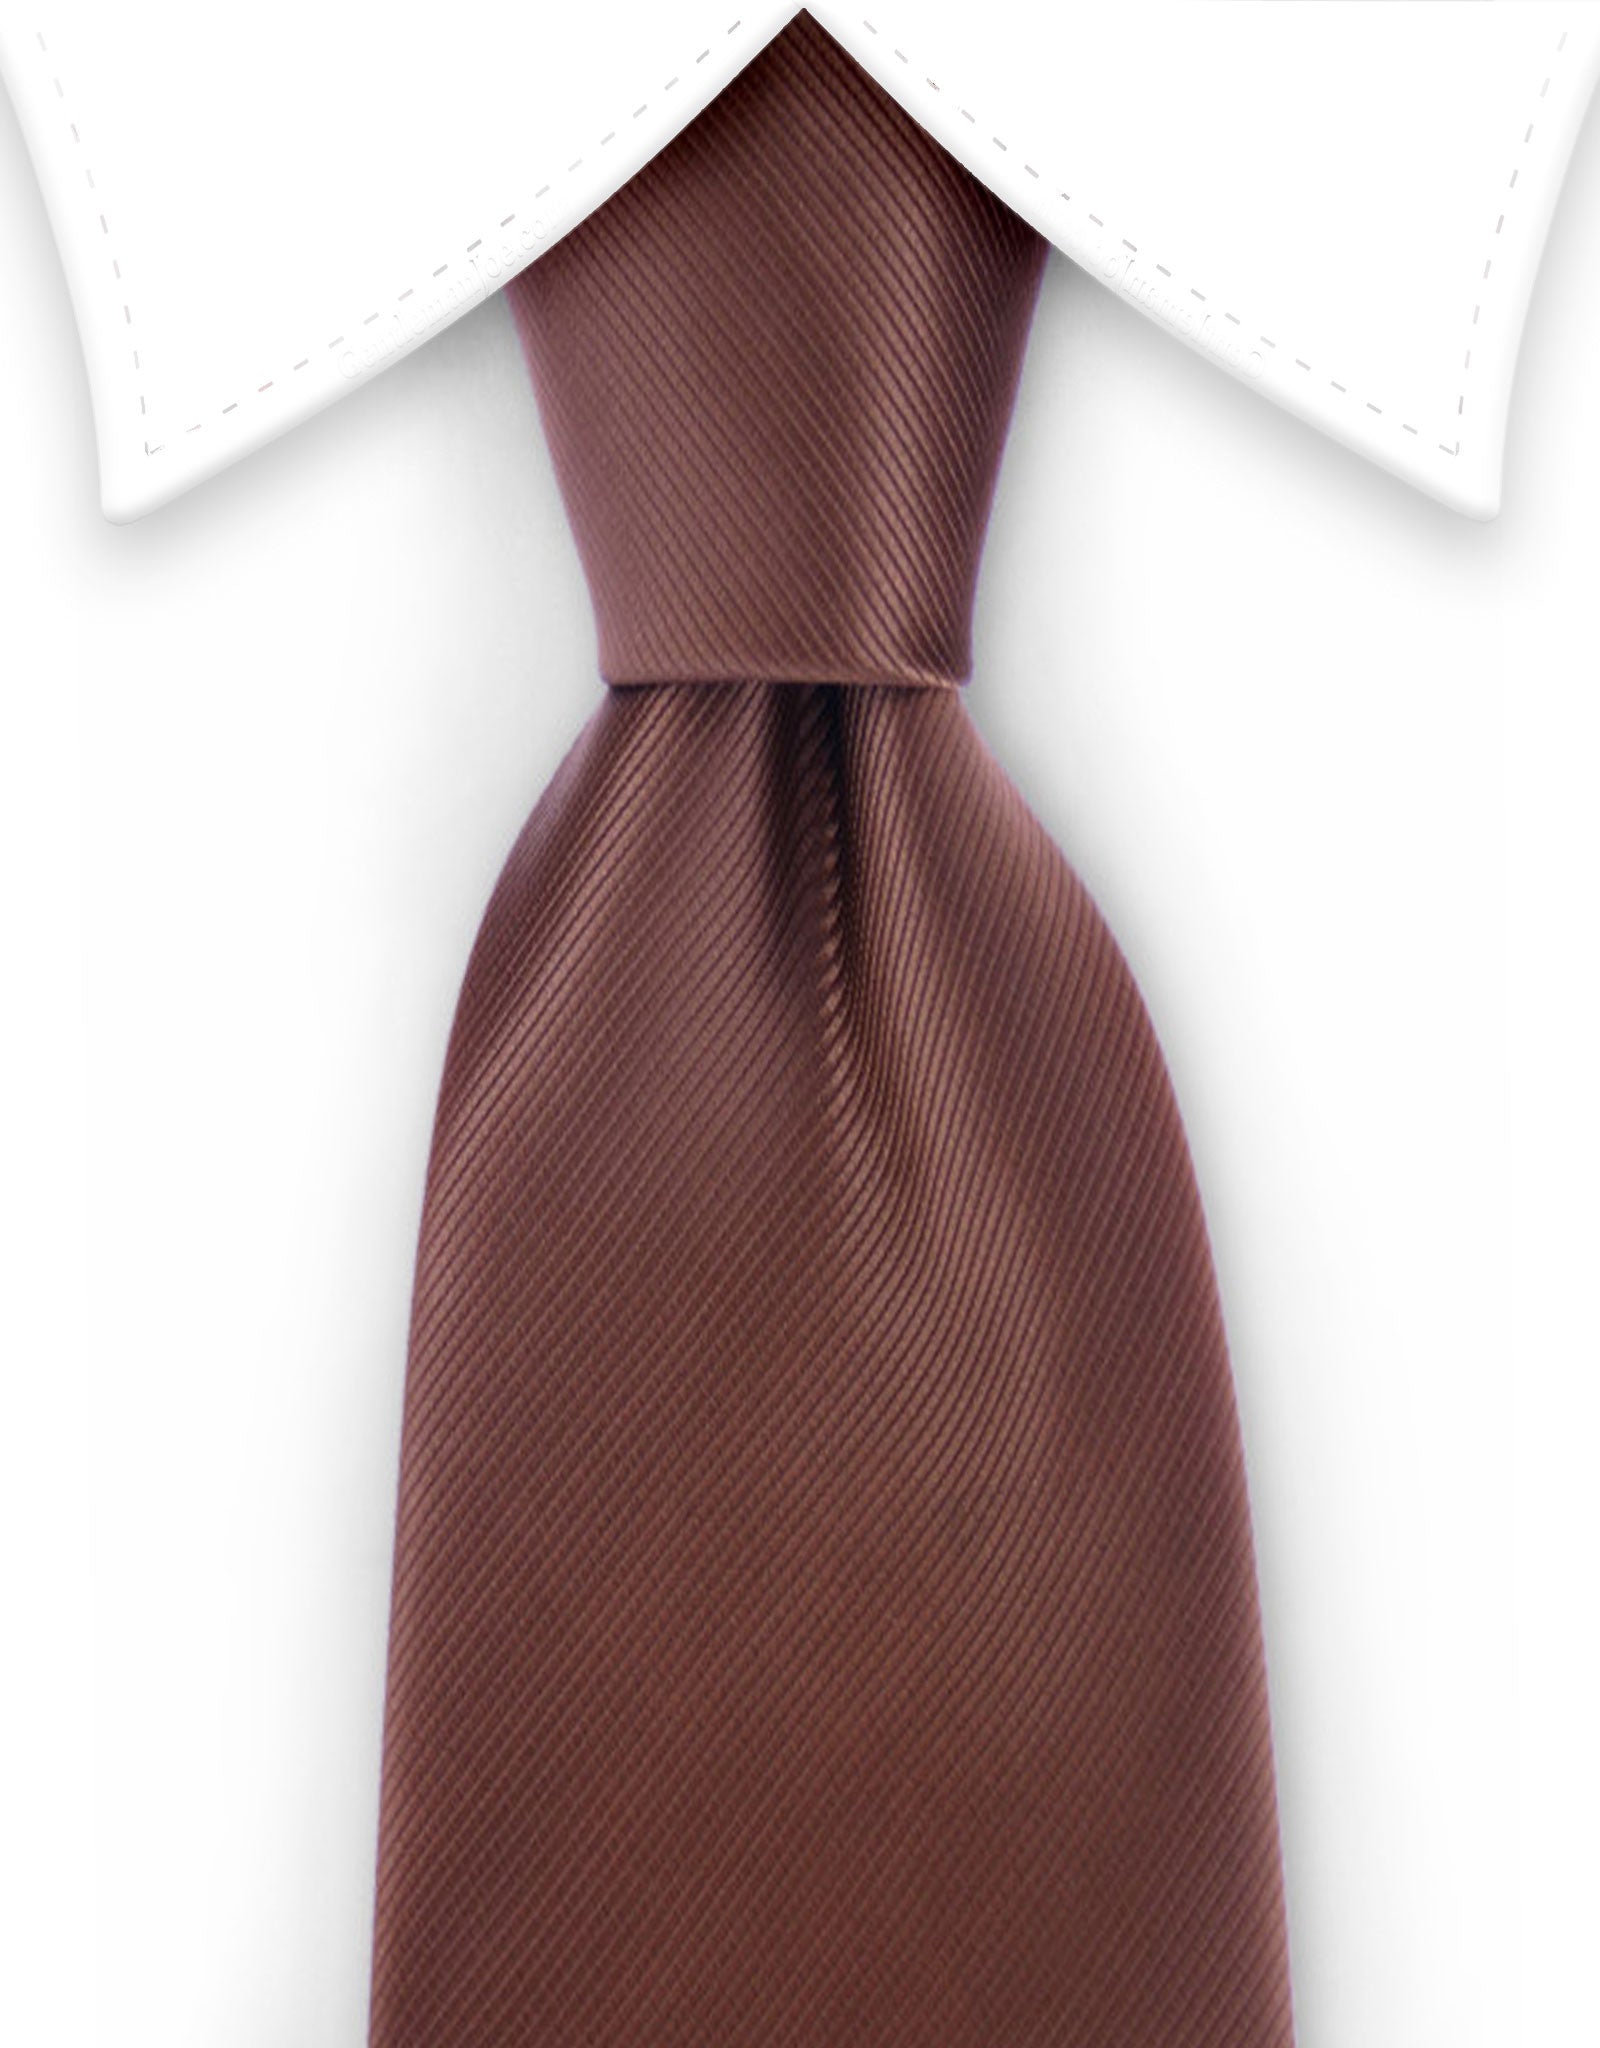 brown tie